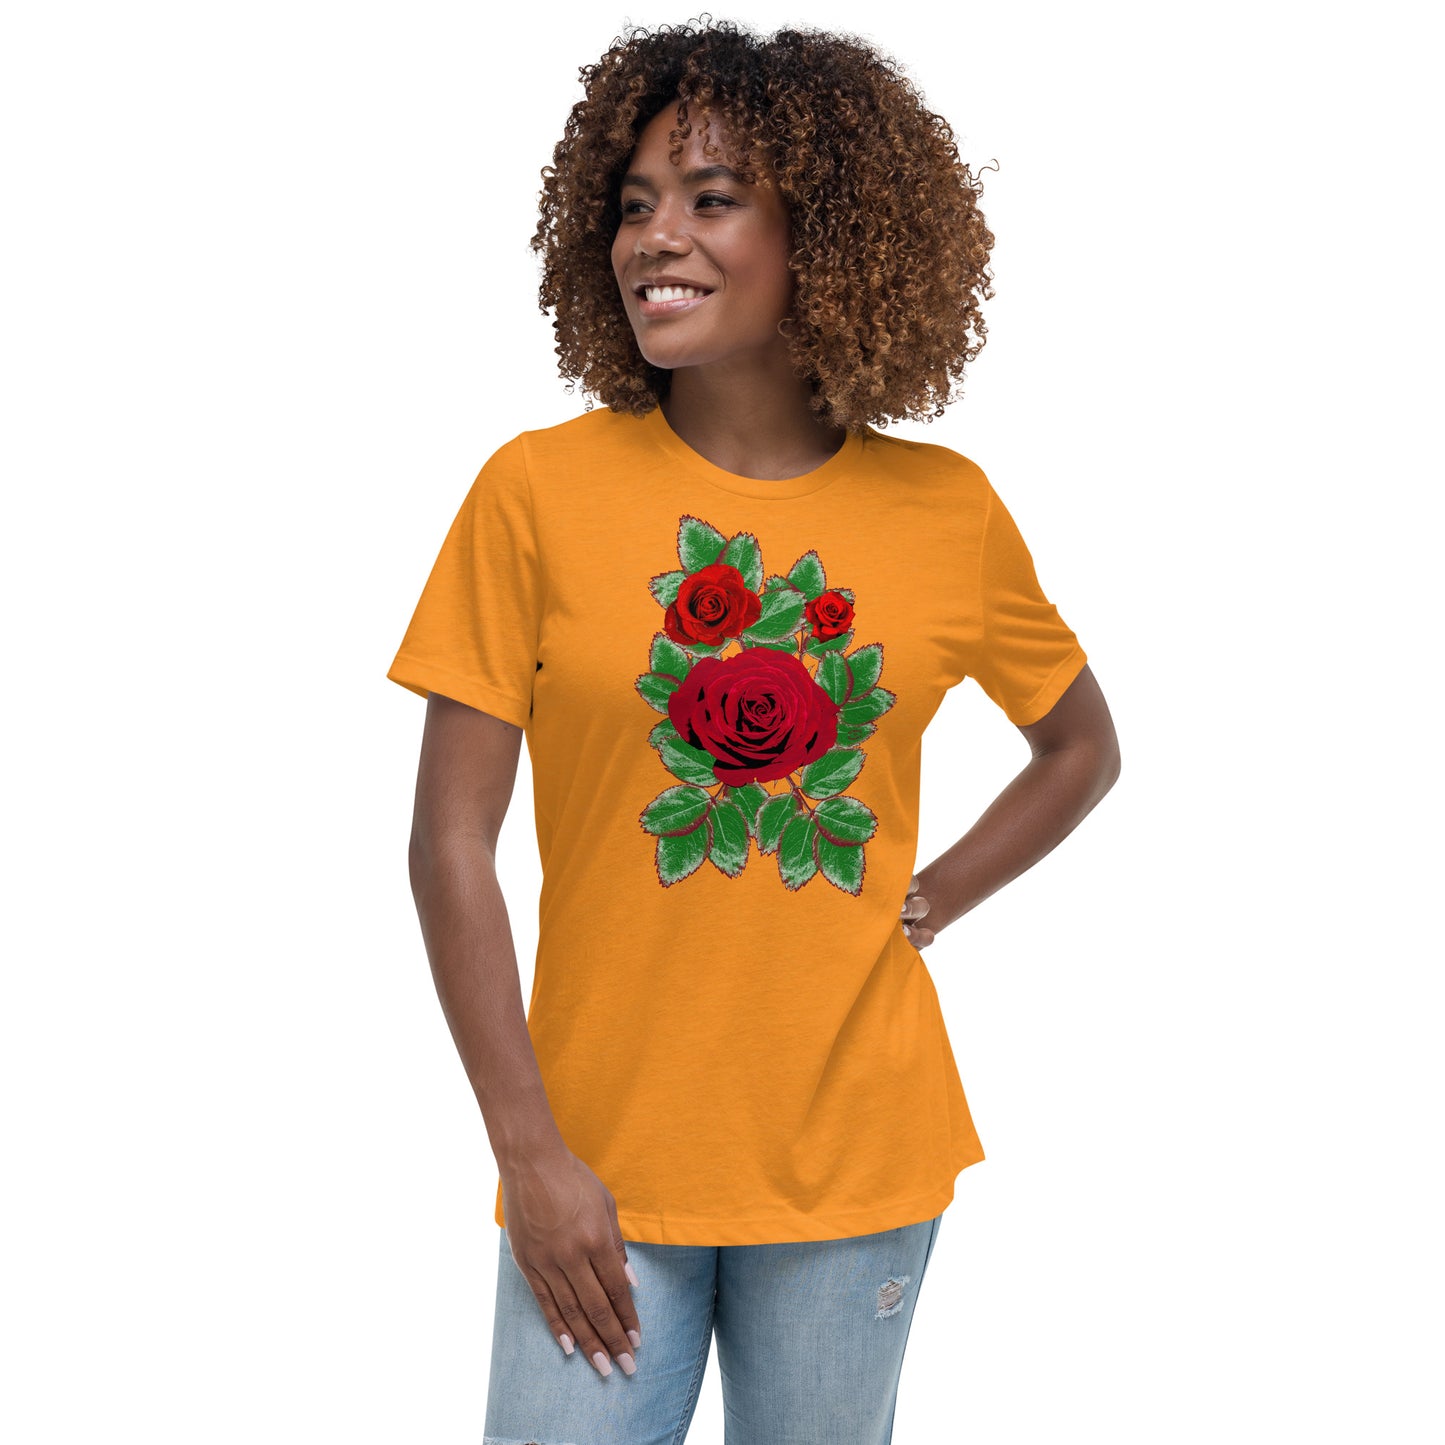 "Roses" Women's Relaxed T-Shirt